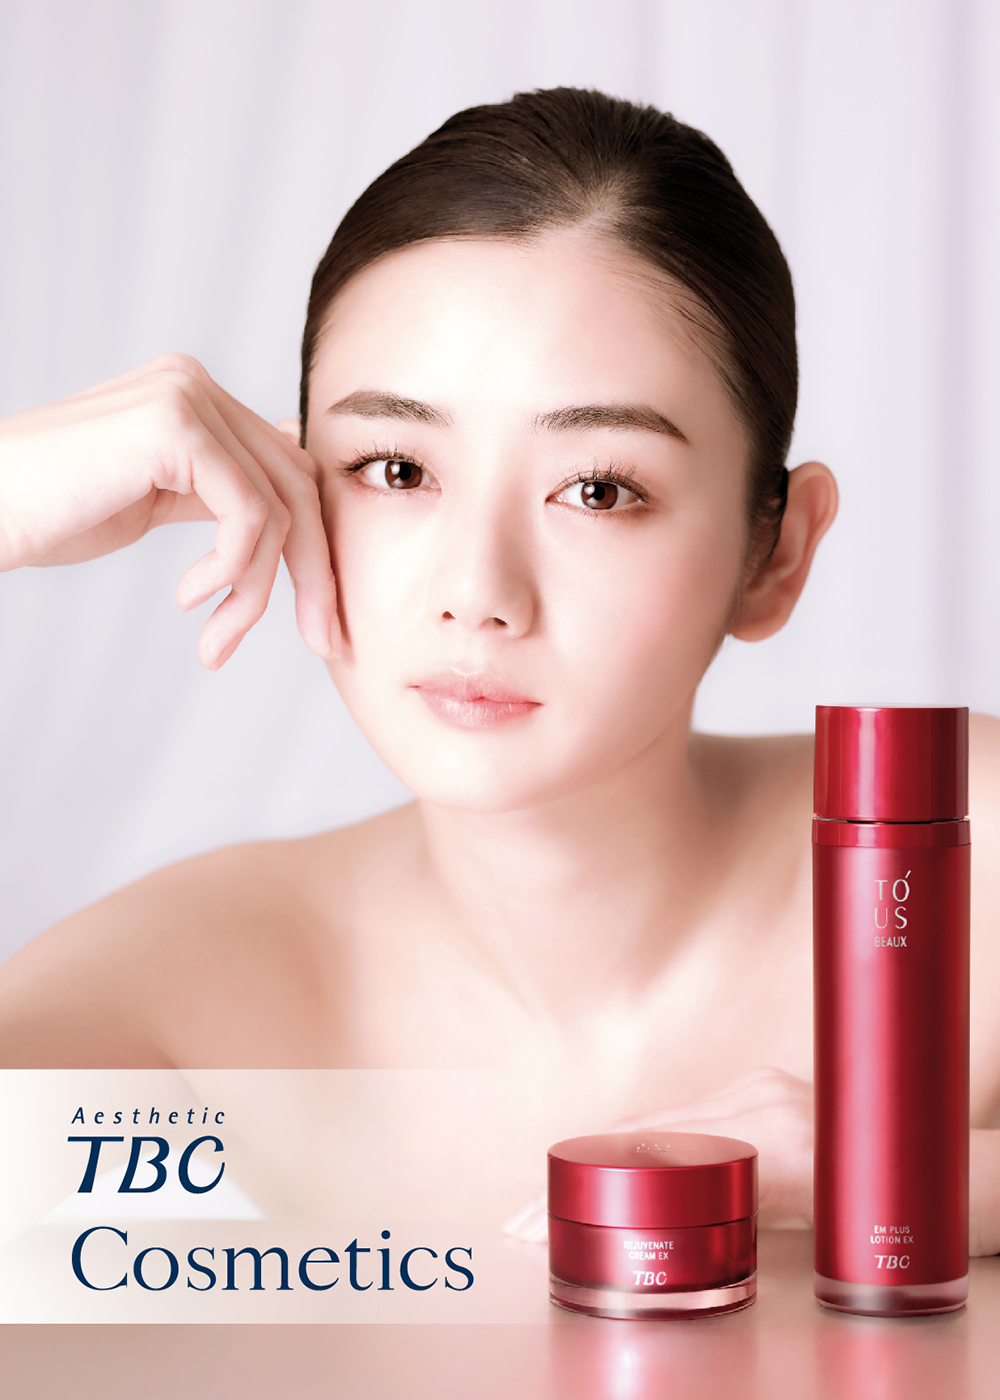 TBC ผลิตภัณฑ์ความงามพรีเมี่ยมจากญี่ปุ่น